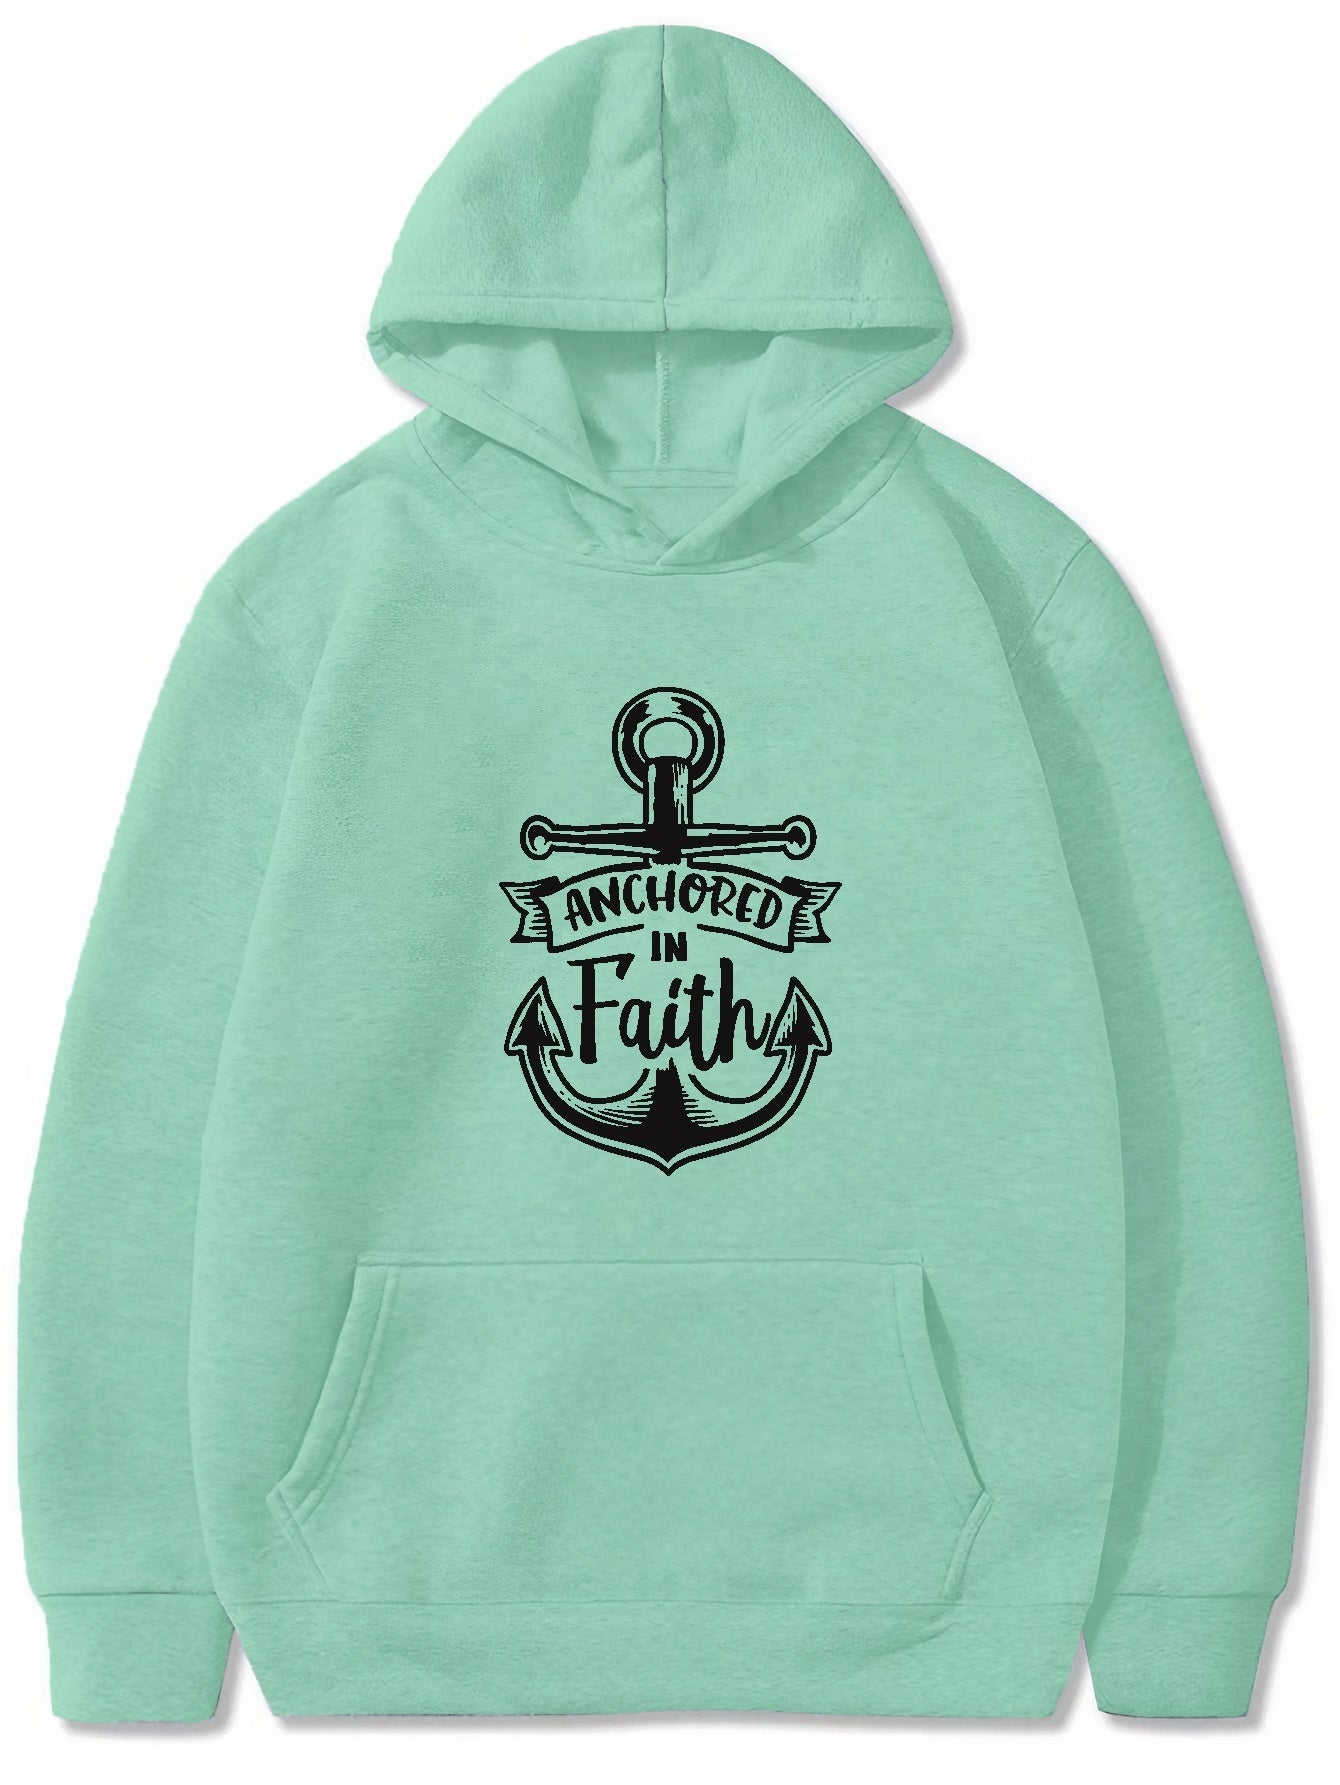 Anchored In Faith Men's Christian Pullover Hooded Sweatshirt claimedbygoddesigns